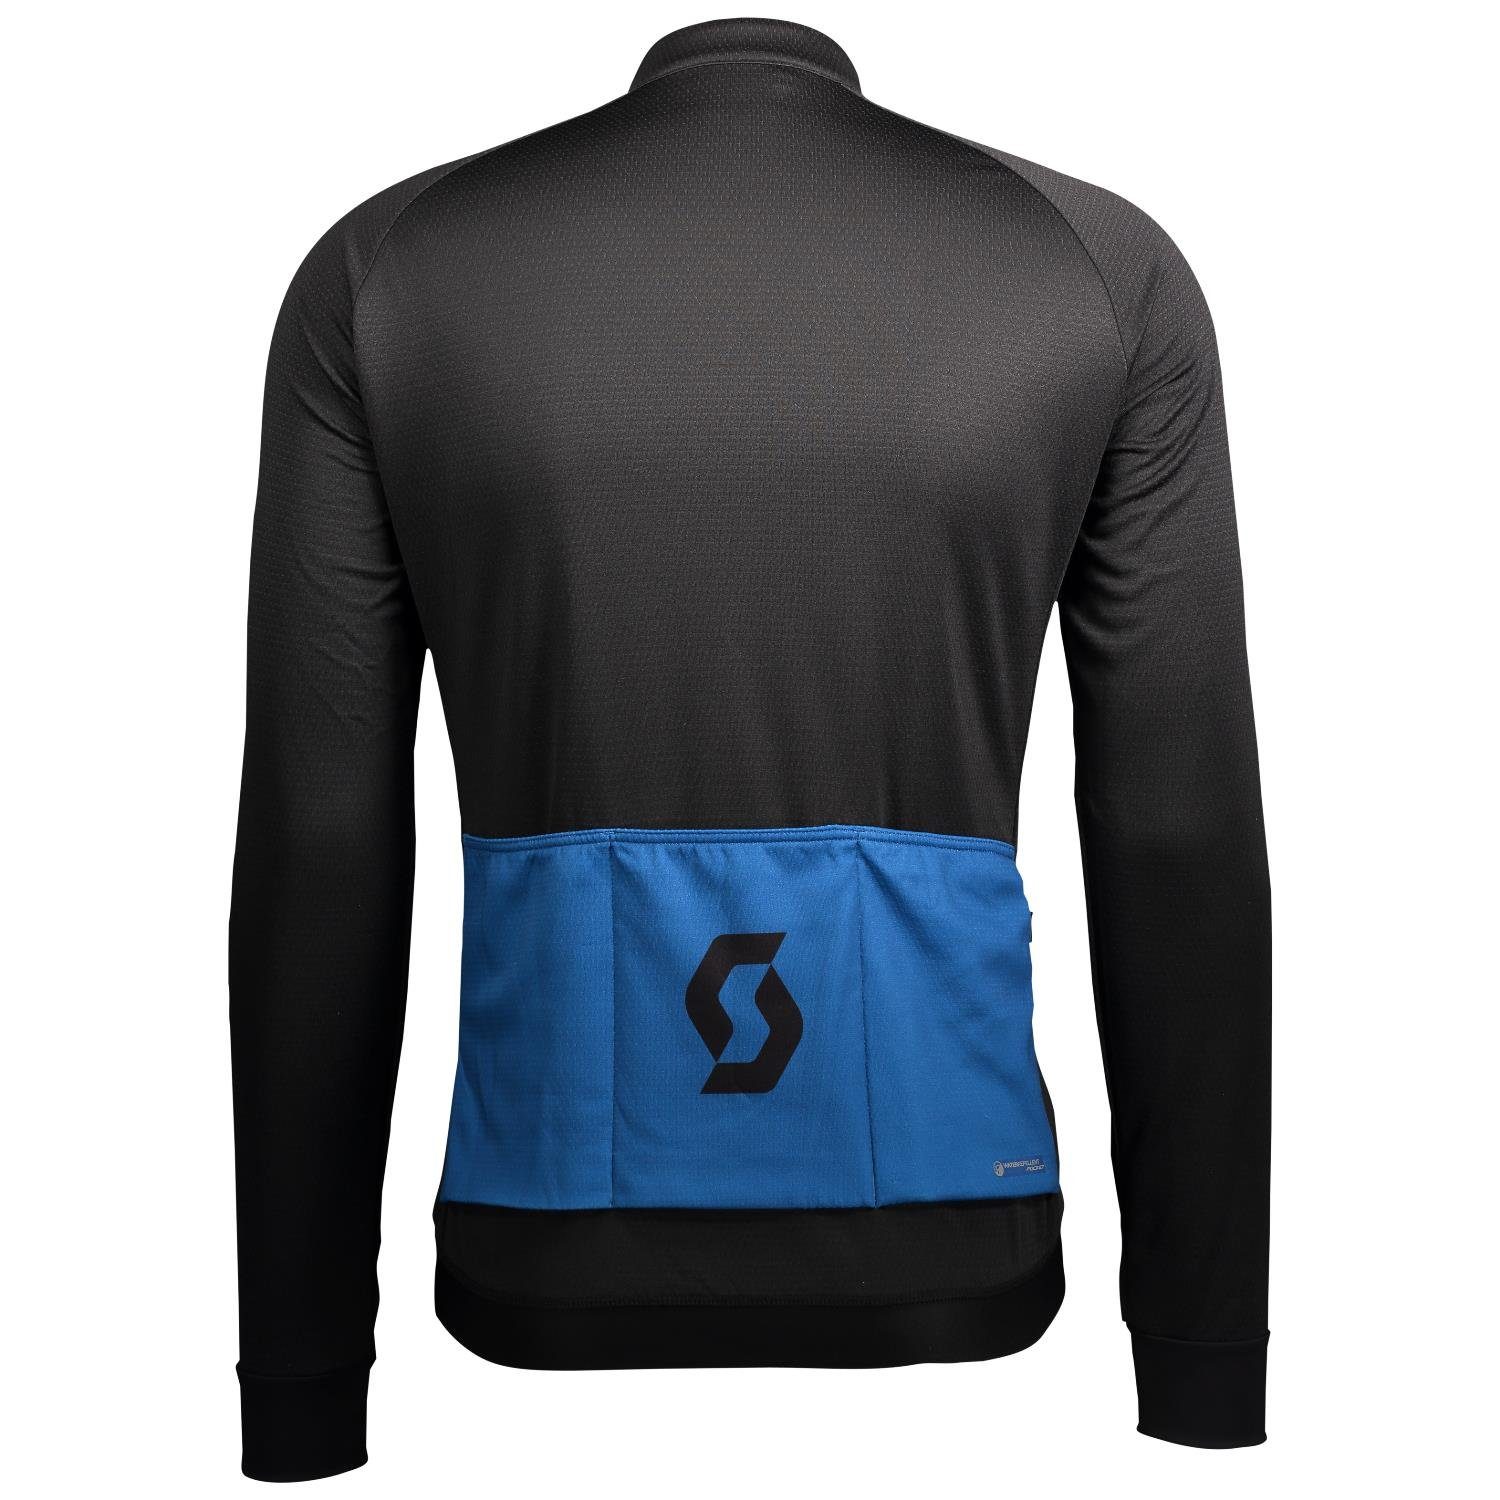 M's RC Radtrikot Scott black/storm Scott blue Warm Shirt l/s